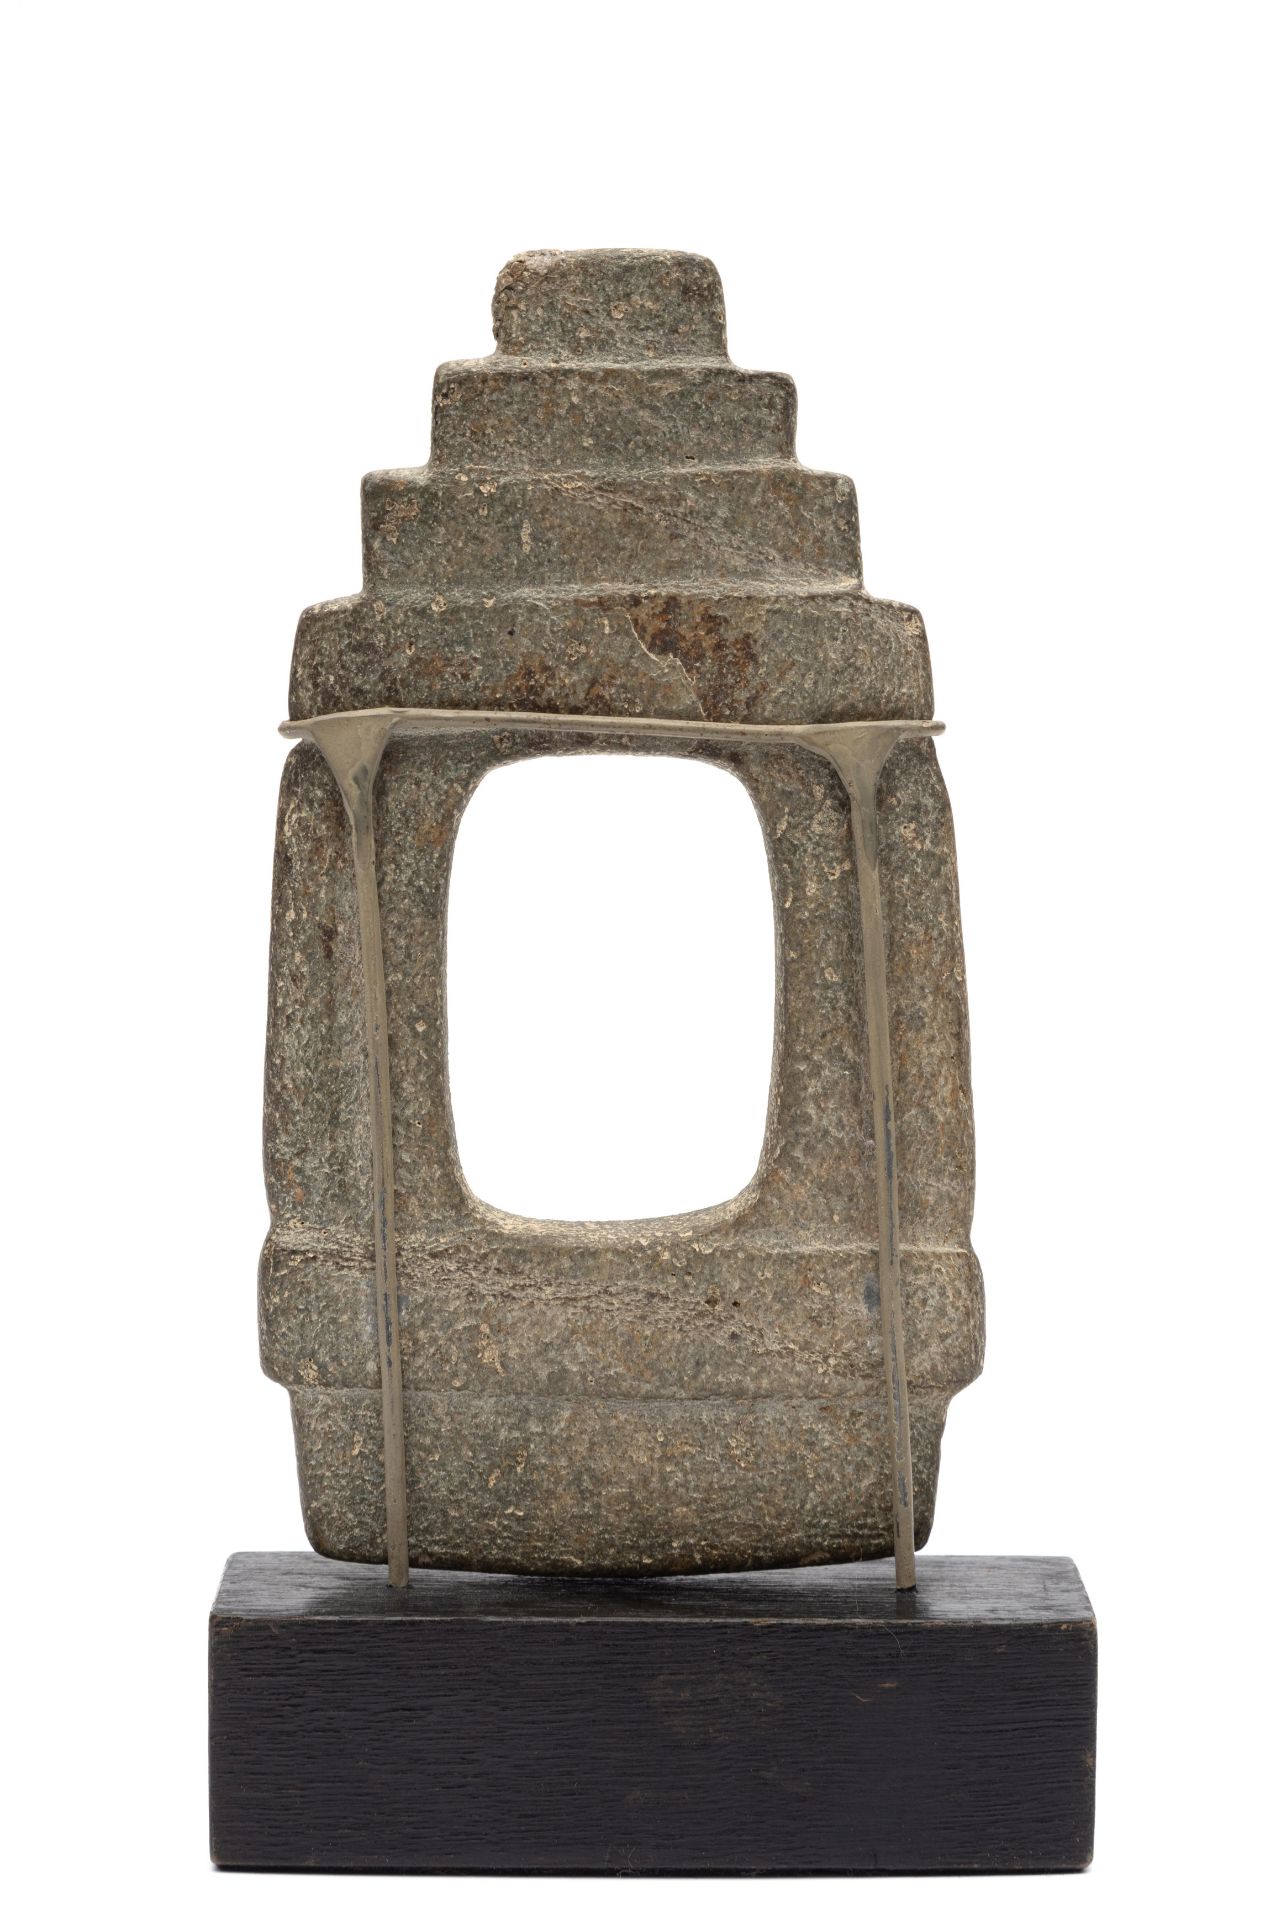 Mexico, Mezcala, grey stone temple sculpture, 300 BC - 100 BC.